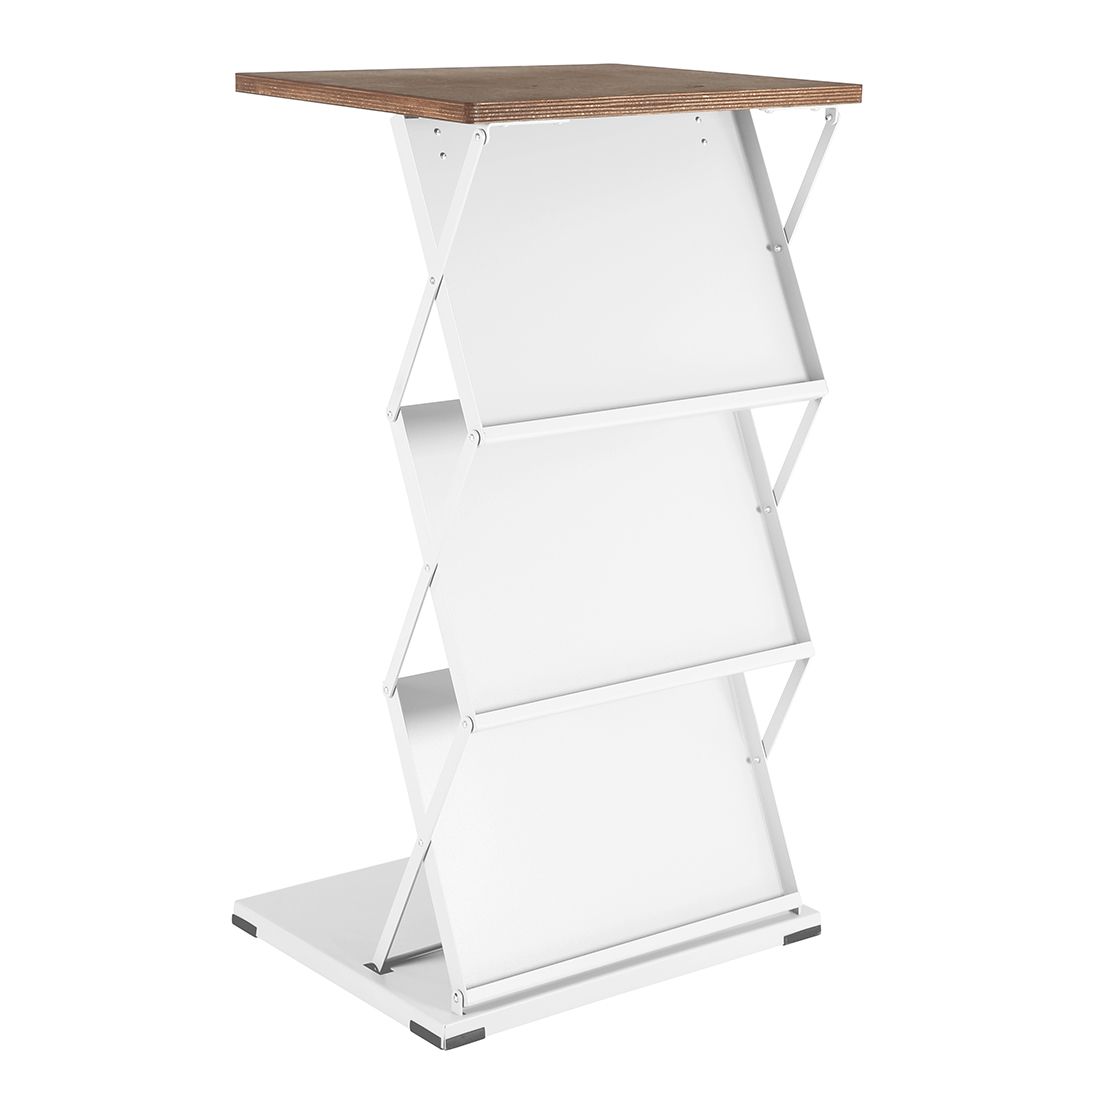 Bílý skládací stolek 6xA4 - hnědá deska